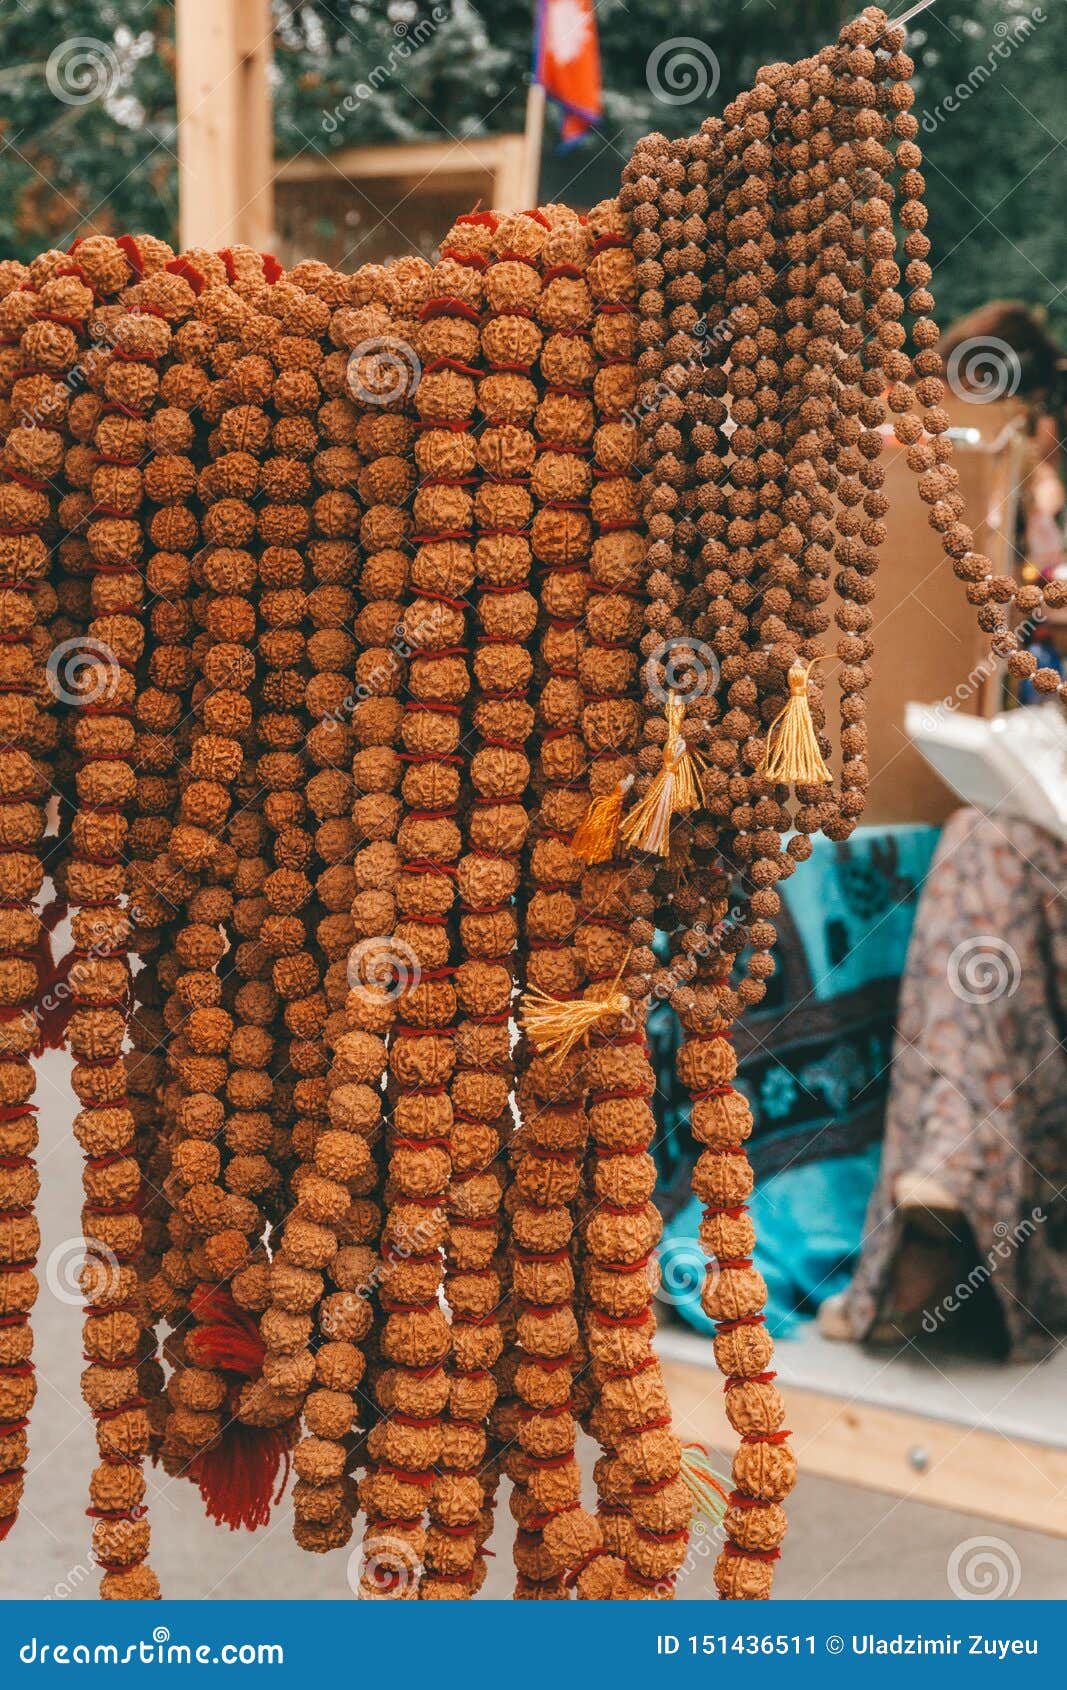 Rudraksha Beads and Rosary. Hindu Sacred Attribute for Prayers